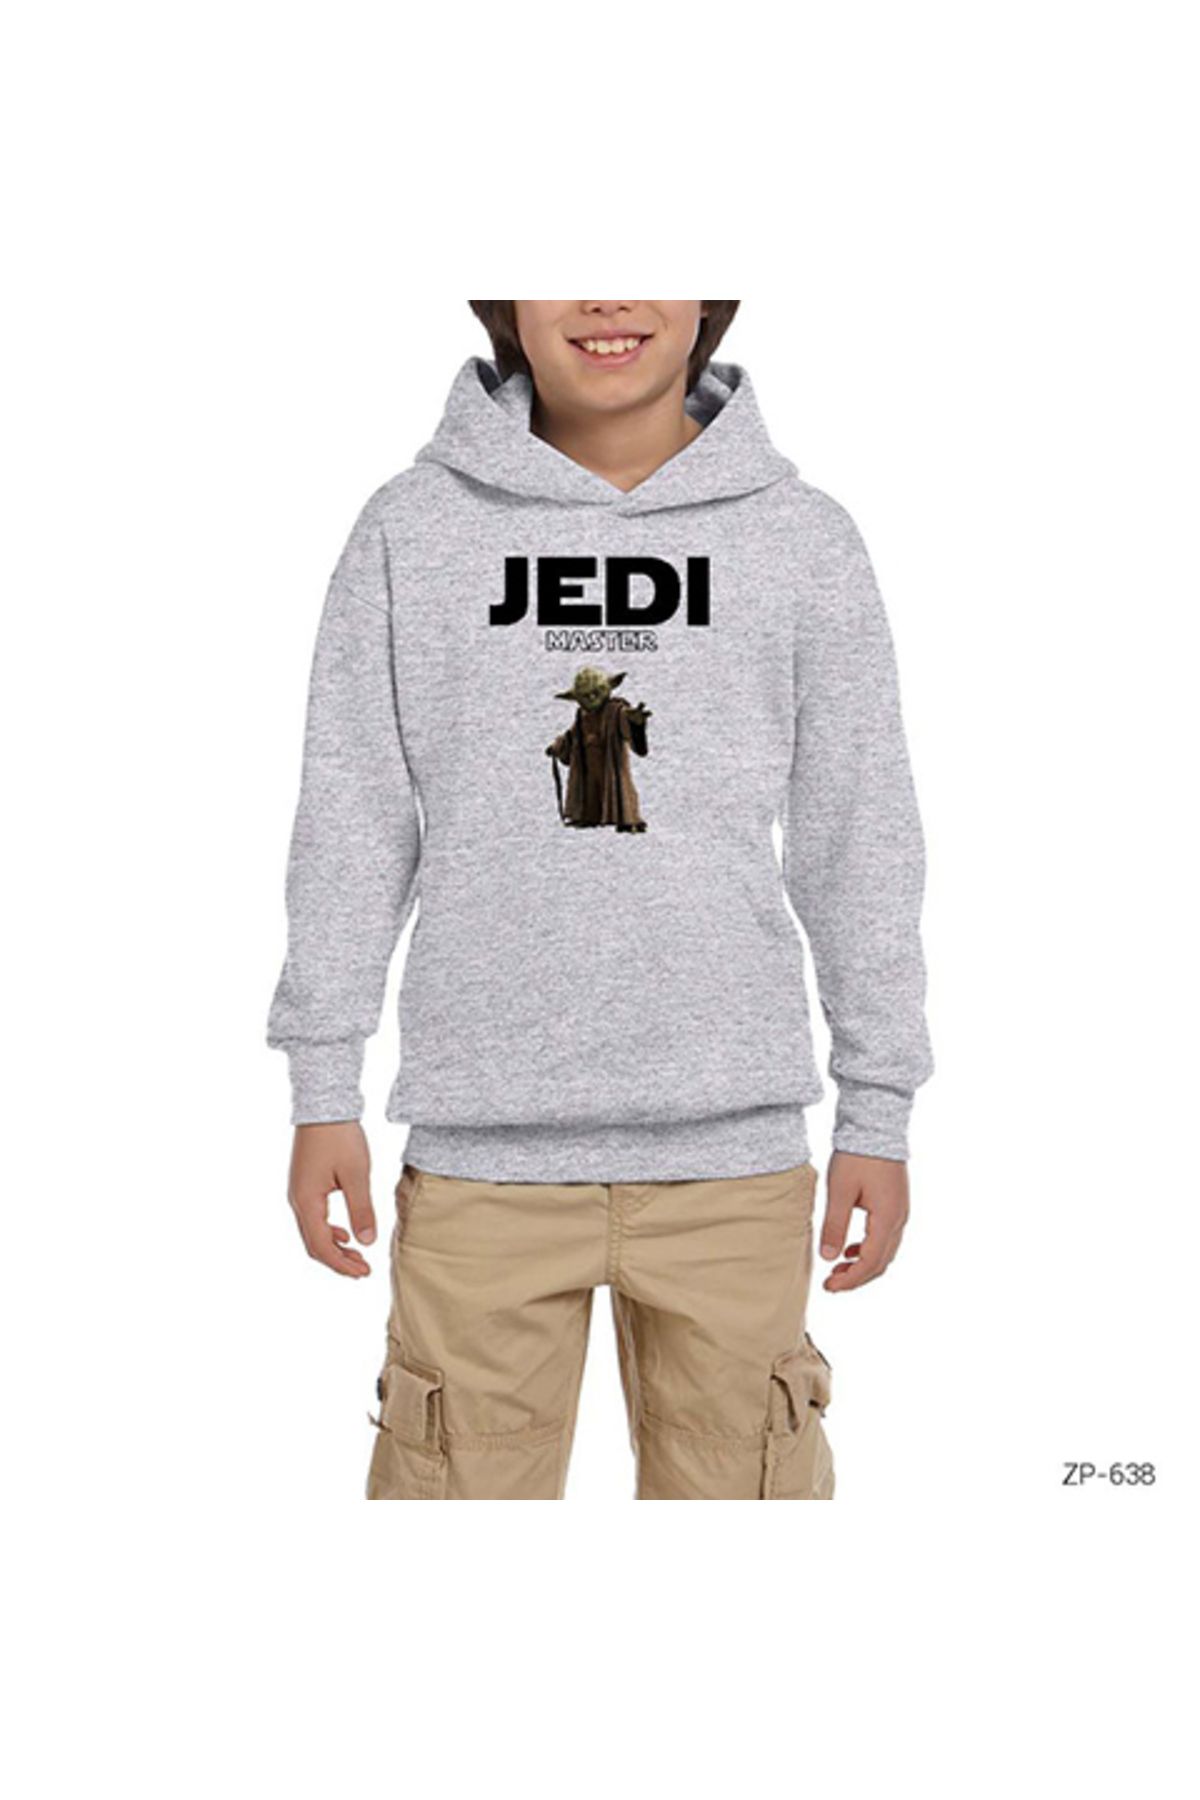 Anonim Moda Star Wars Yoda Jedi Master Gri Çocuk Kapşonlu Sweatshirt